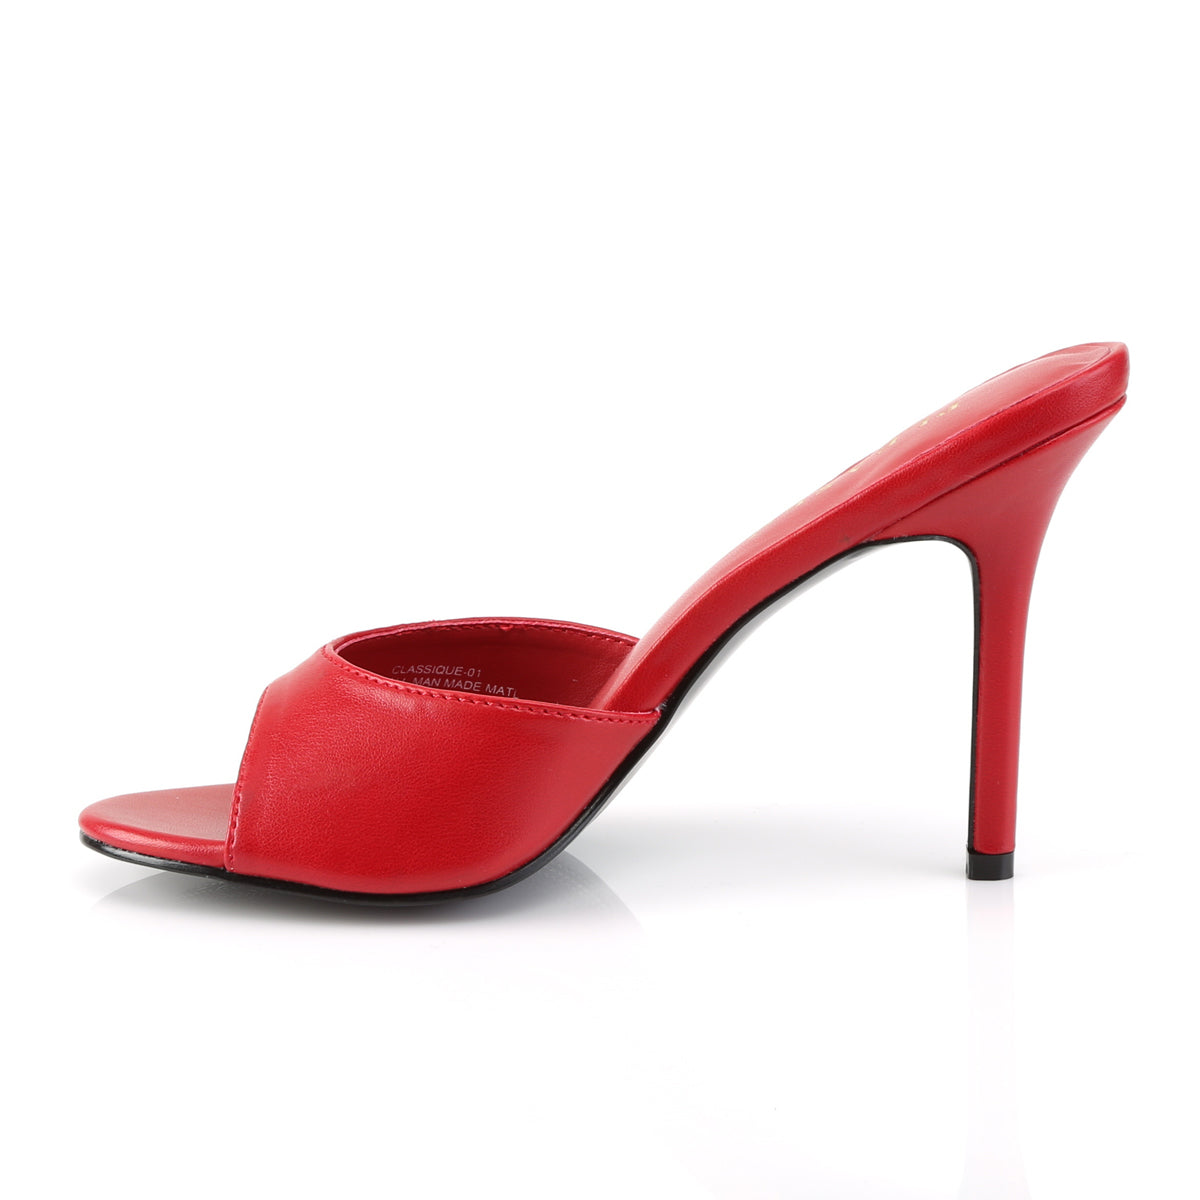 CLASSIQUE-01 Pleaser 4 Inch Heel Red Kid Pu Fetish Footwear-Pleaser- Sexy Shoes Pole Dance Heels